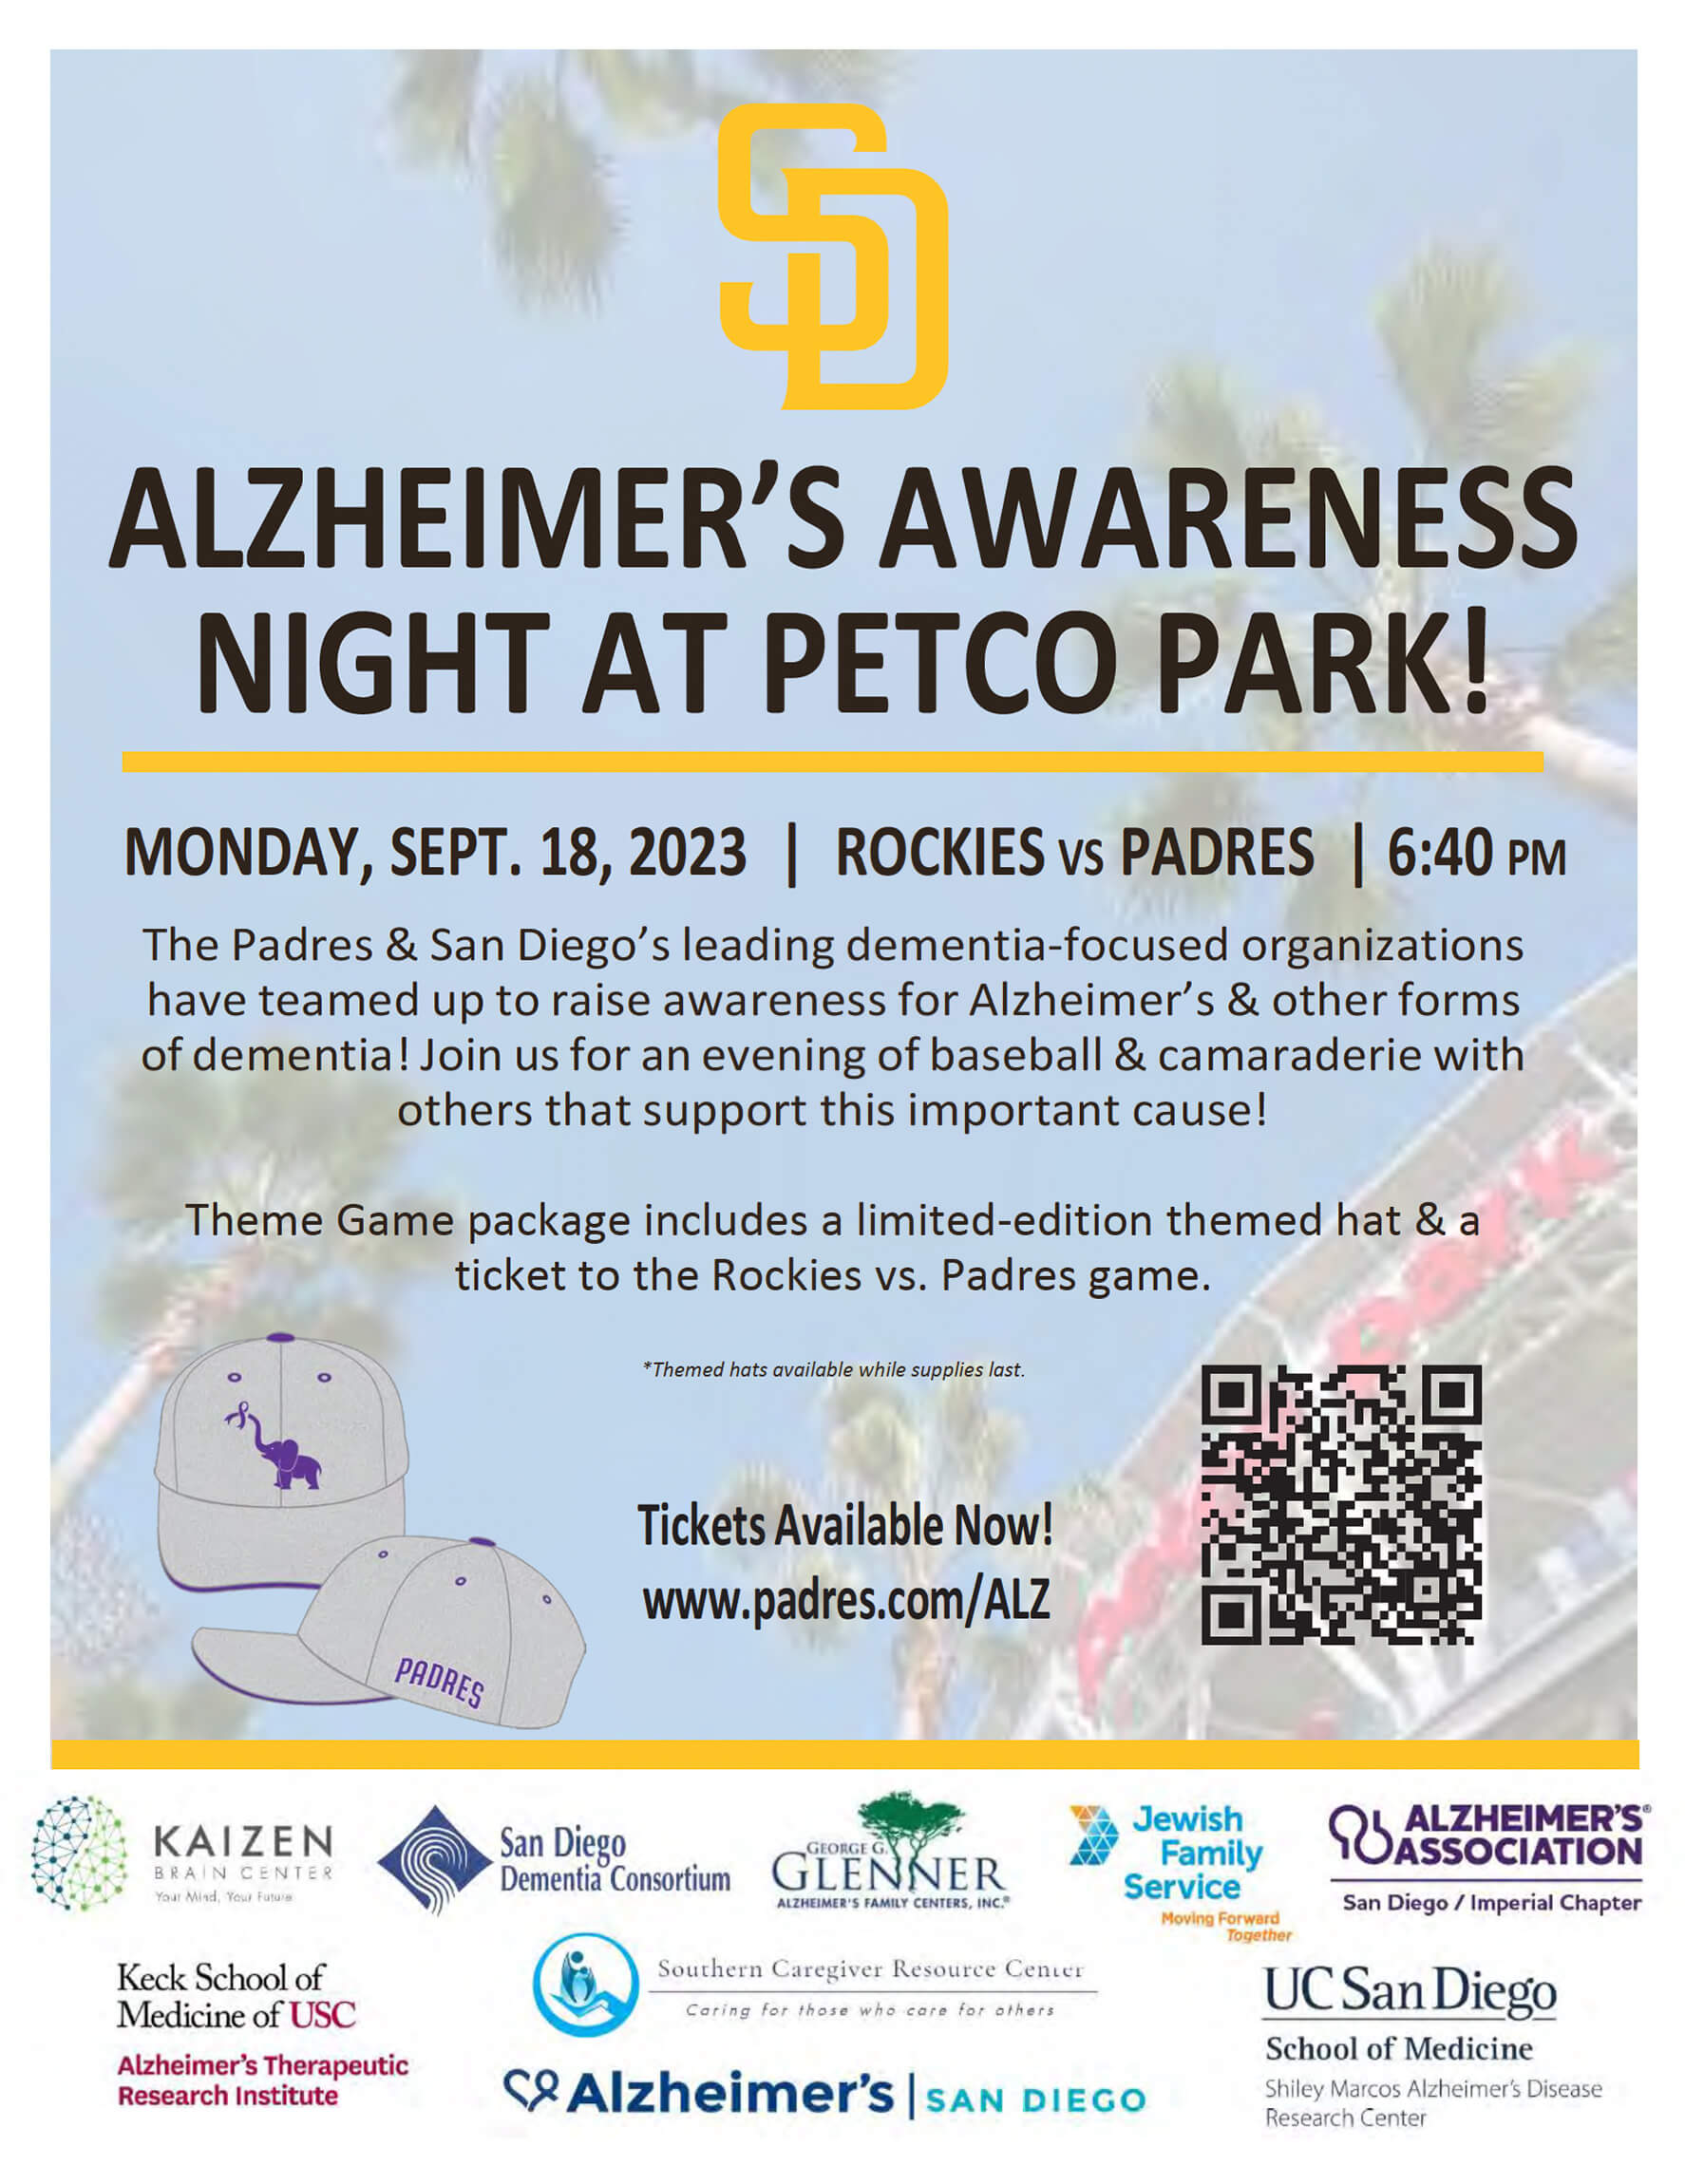 Alzheimers Awareness Night at Petco Park